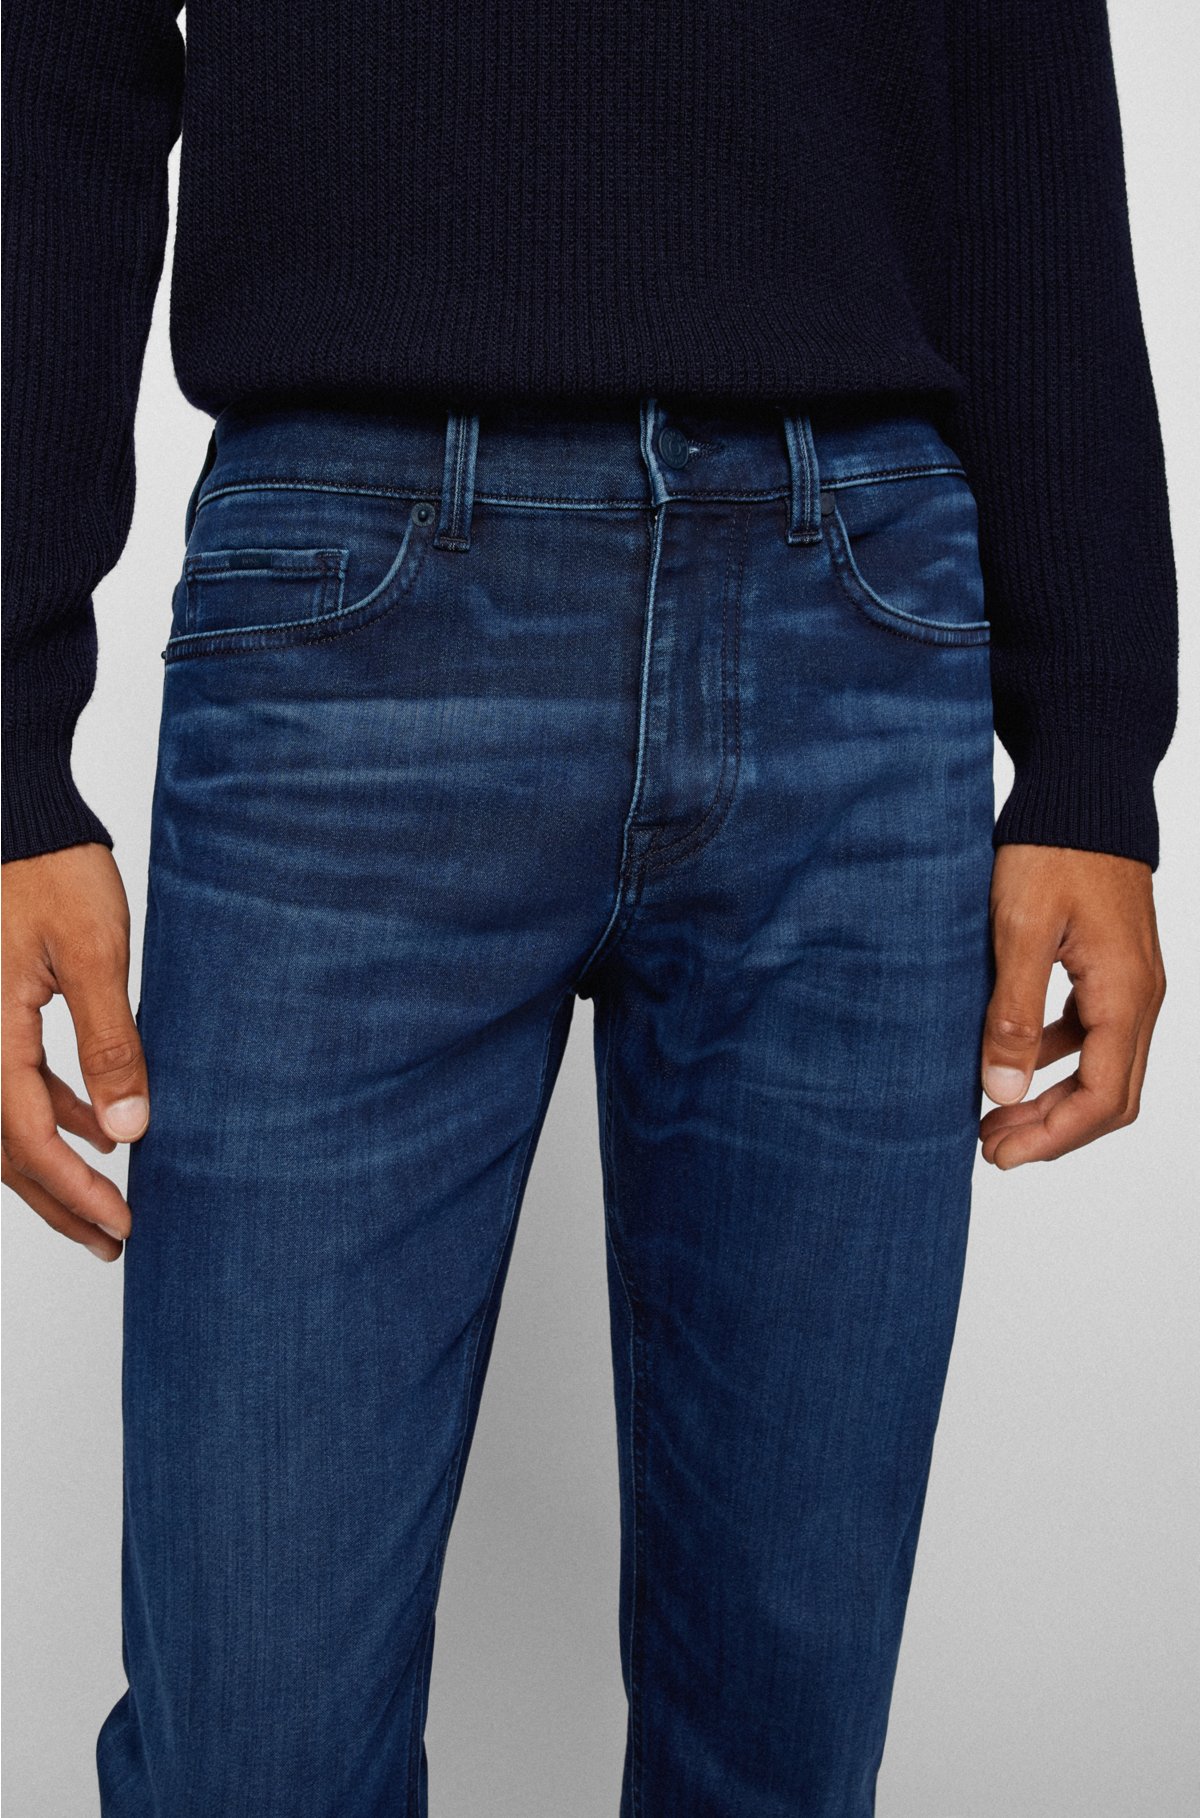 - Slim-fit jeans in dark-blue brushed denim